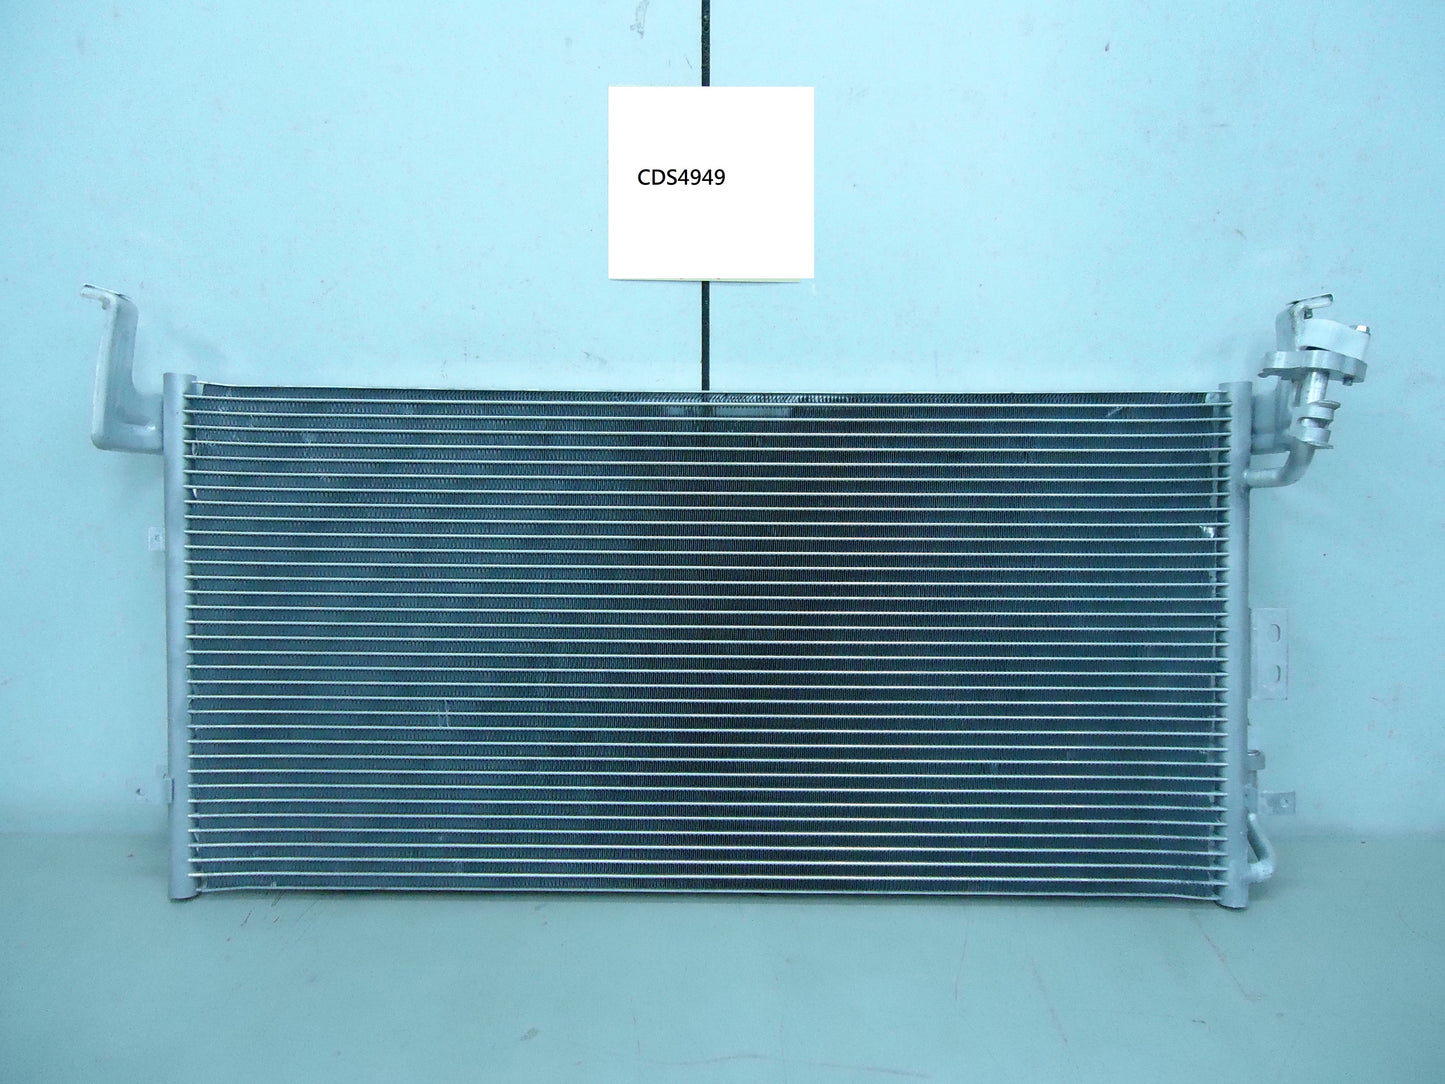 3030 | 2002-2002 HYUNDAI XG350 Air conditioning condenser to 11/11/02 | HY3030112|9760638002